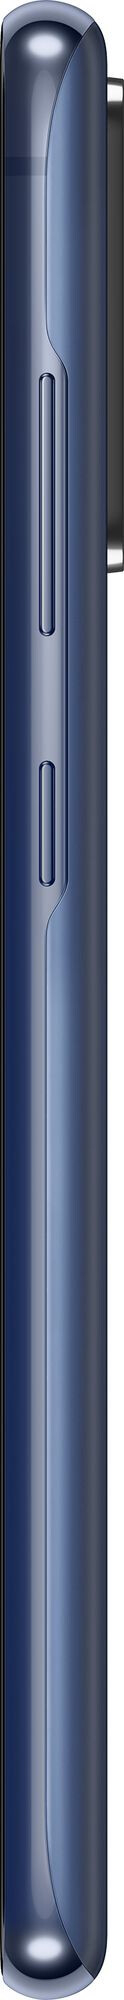 Смартфон Samsung Galaxy S20FE (SM-G780G) 8/256GB (ЕАС) Cloud Navy (Синий)